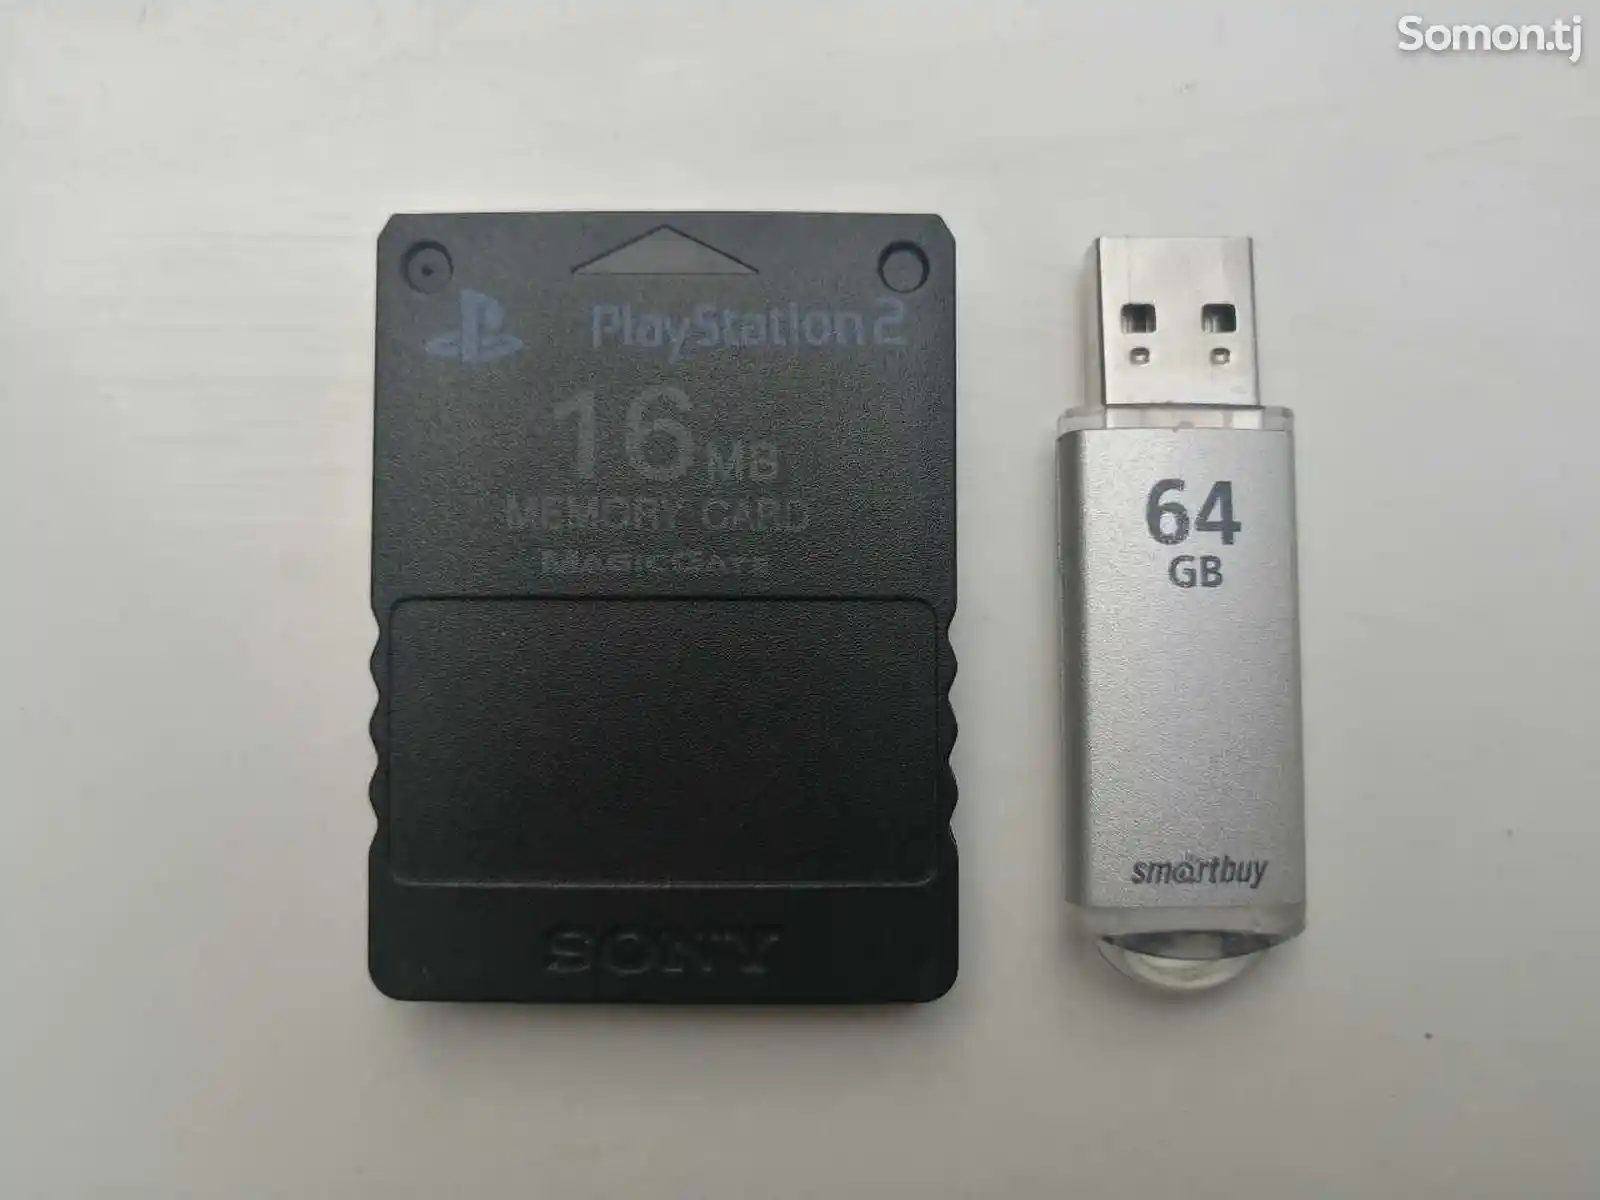 Комплект memory card и USB флешка с играми для Sony PS2-1